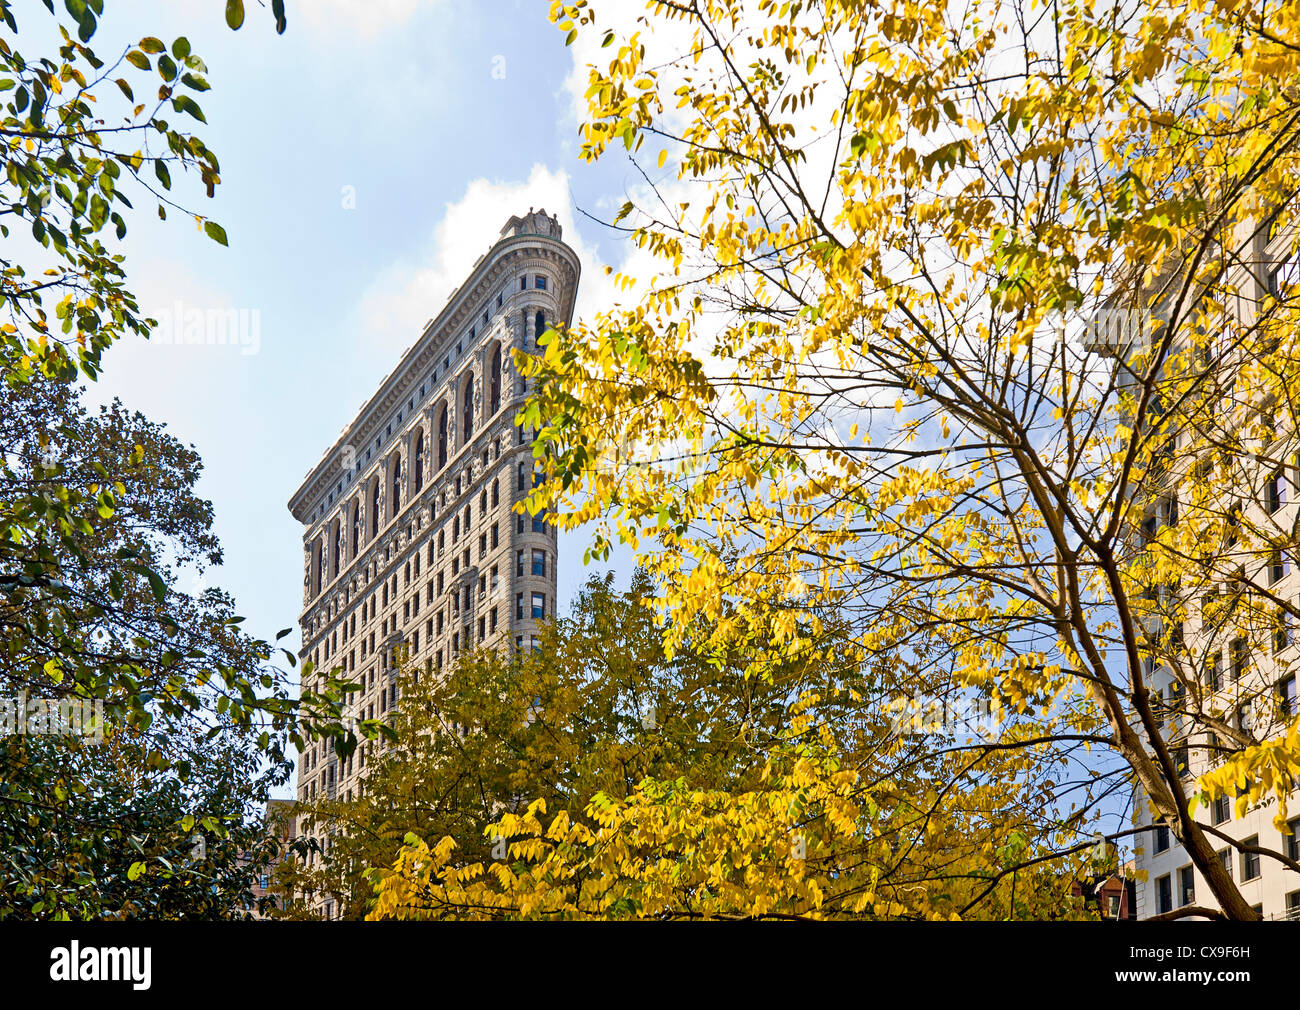 The Flatiron Building on 23rd Street in Manhattan, New York City. Stock Photo